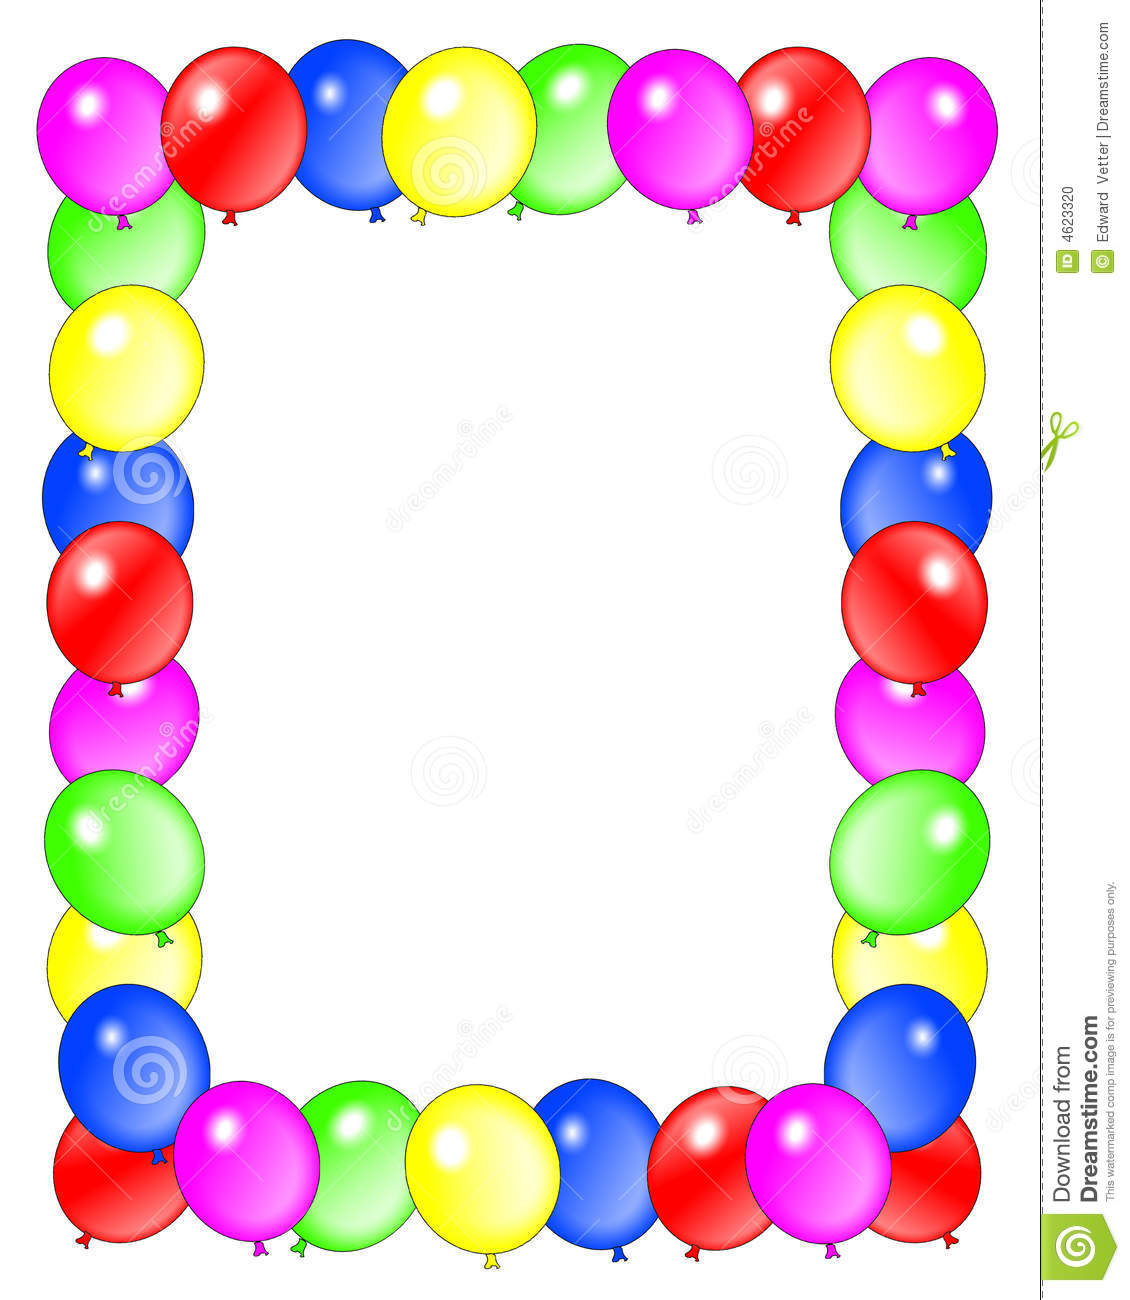 birthday-clip-art-borders-birthday-balloons-border-frame-4623320.jpg 1130 x 1300. Download. Birthday Clip Art Borders ...